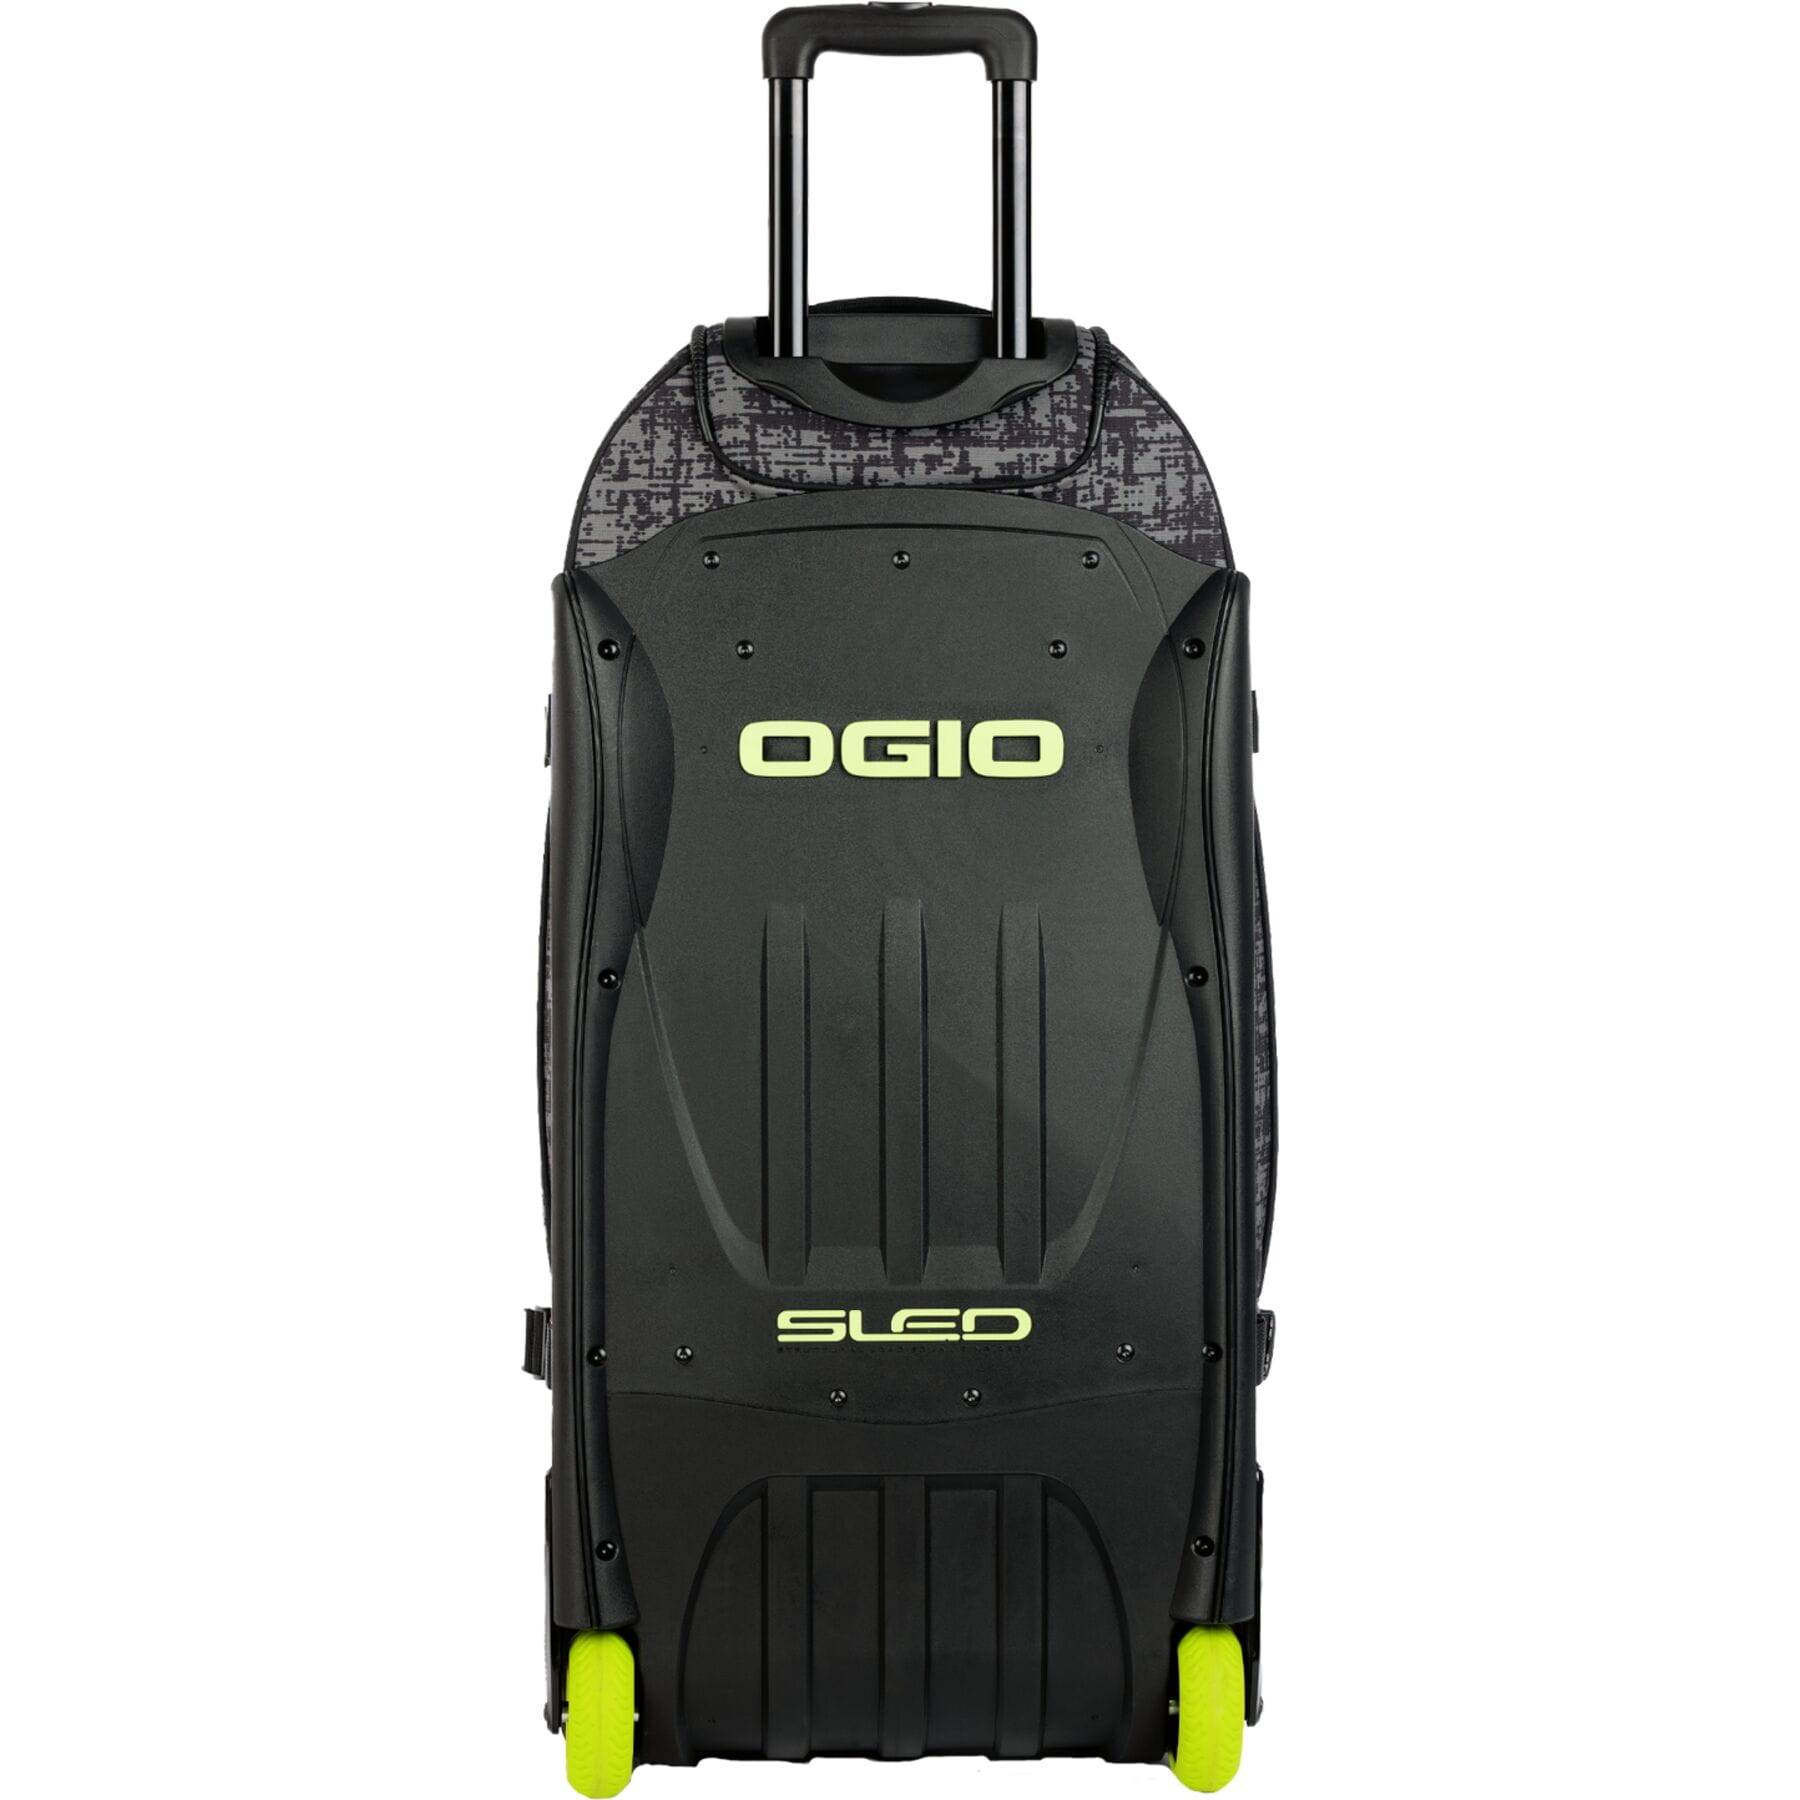 Ogio Rig 9800 PRO Gear Bag Chaos